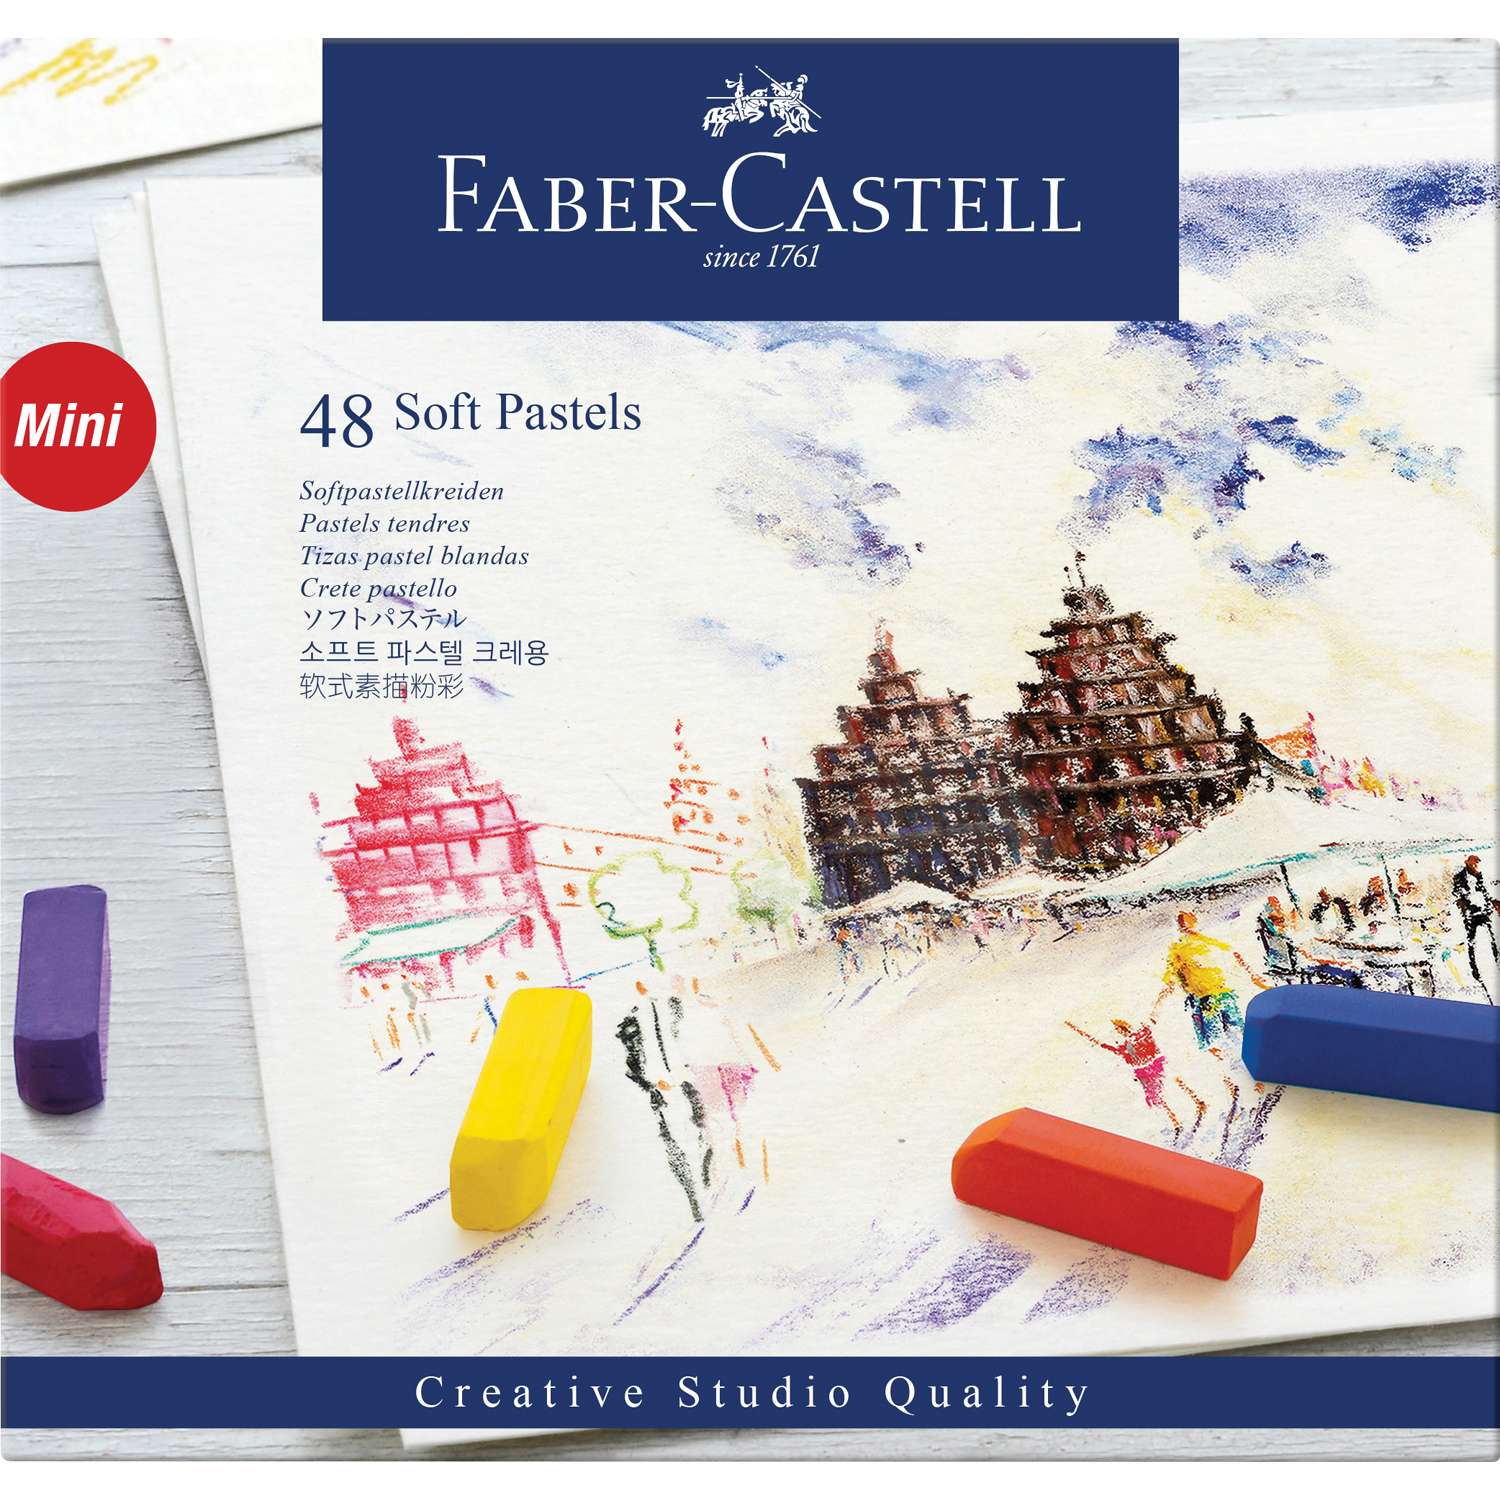 Пастель Faber Castle Soft pastels 48 цветов мини - фото 1